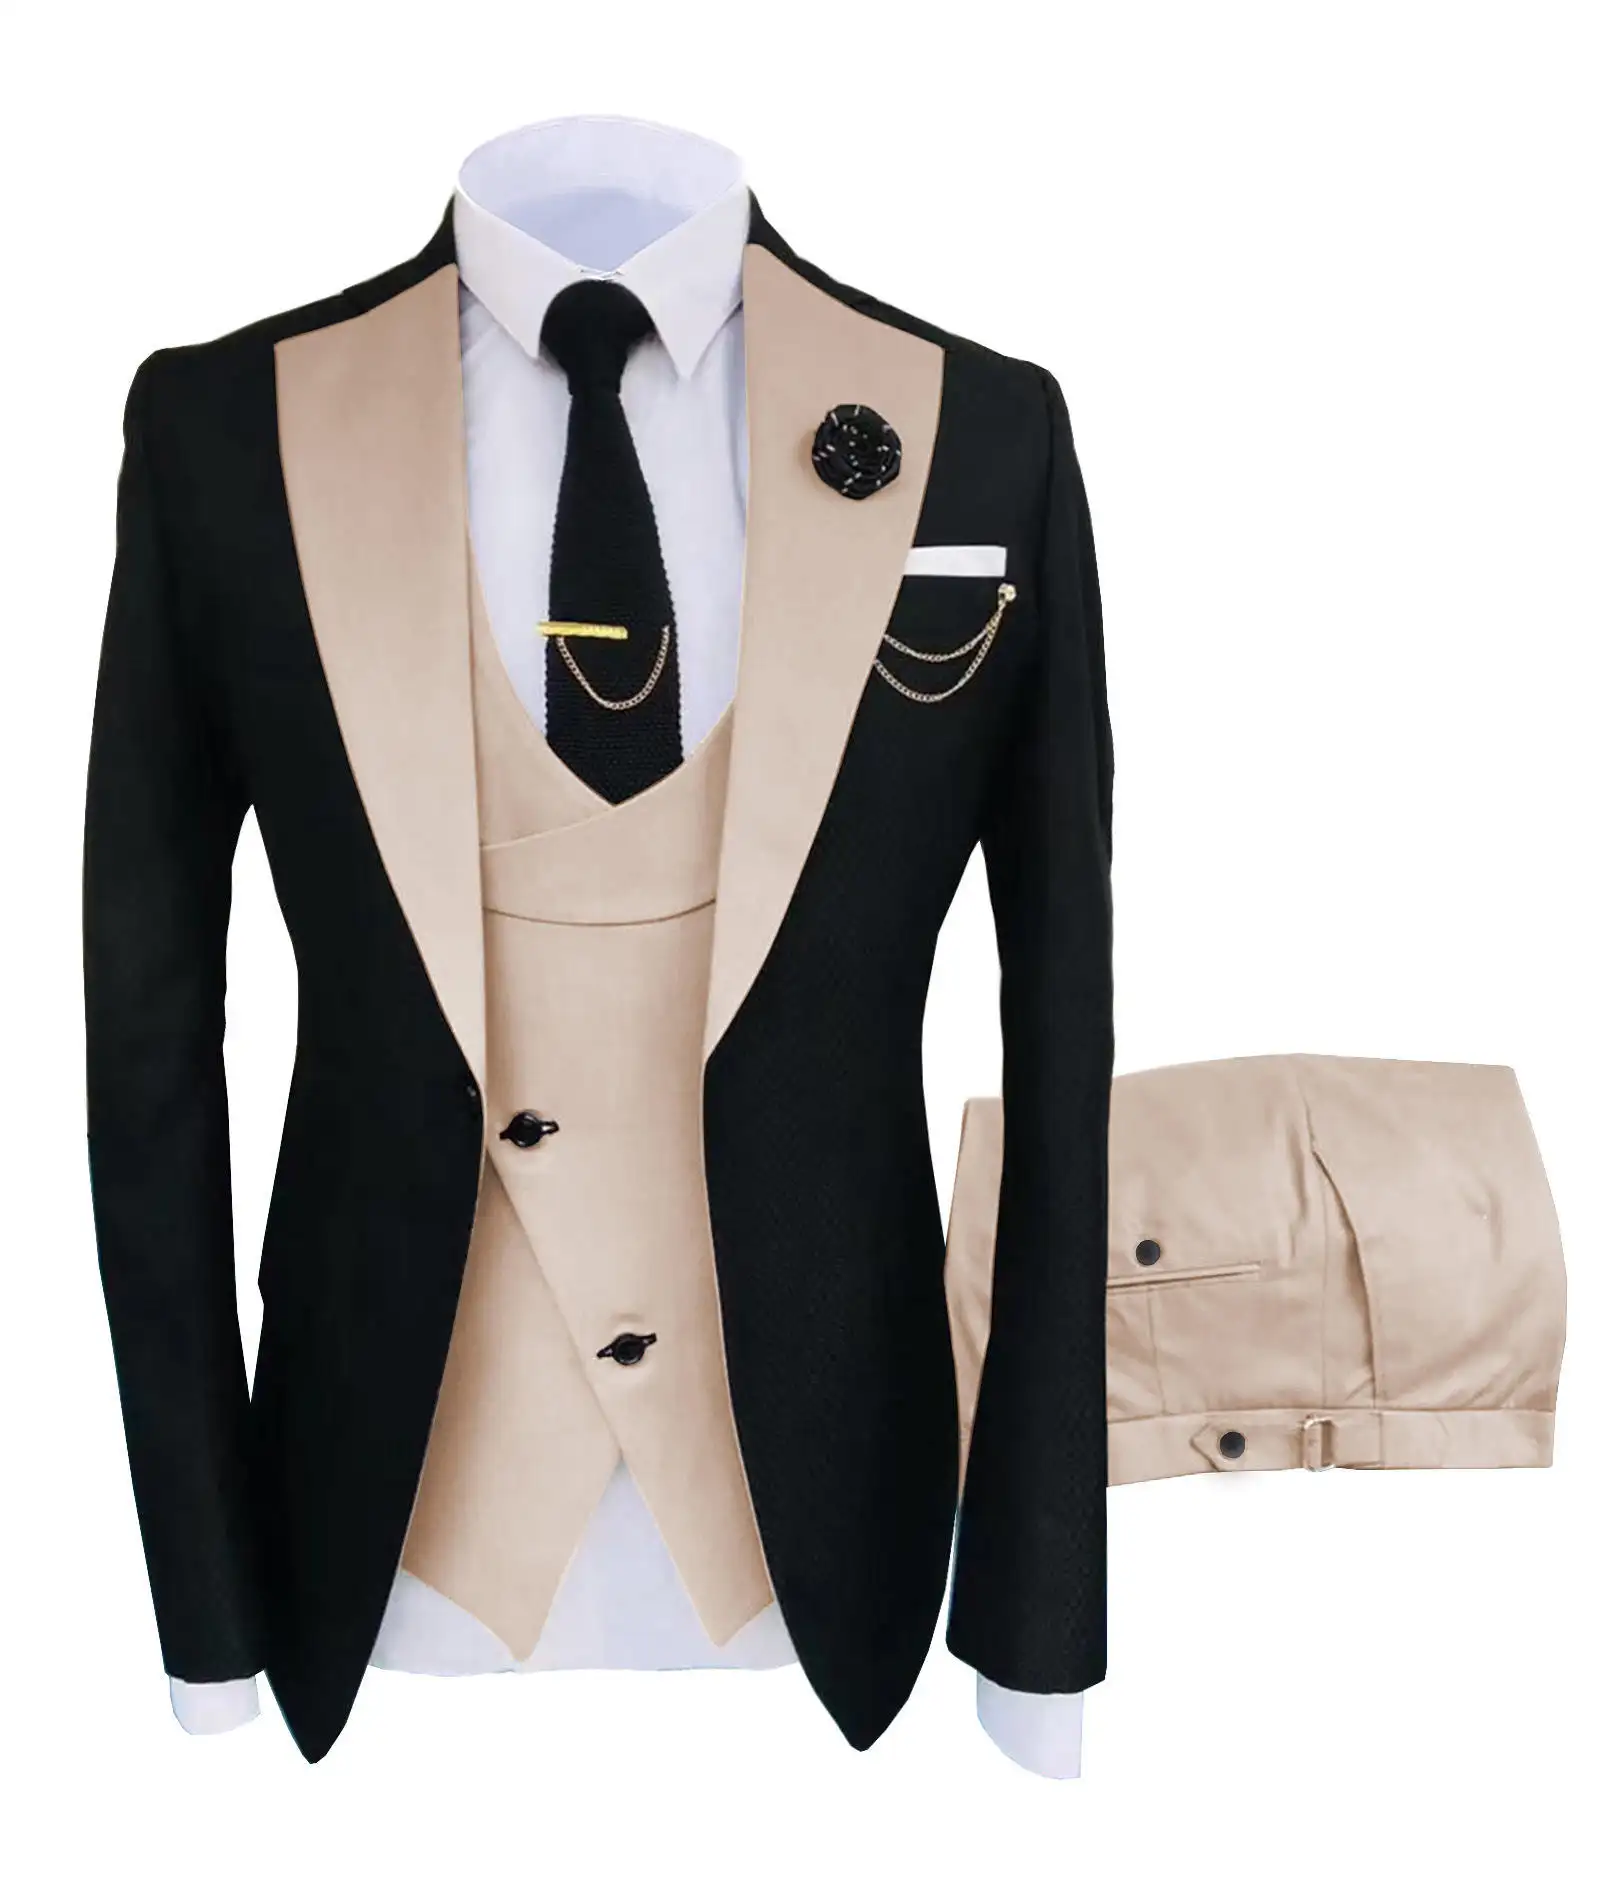 OEM Costume fashion smart tuxedo wedding business elegant leisure for gentleman jacket 3 pieces blazer set slim fit men's suits